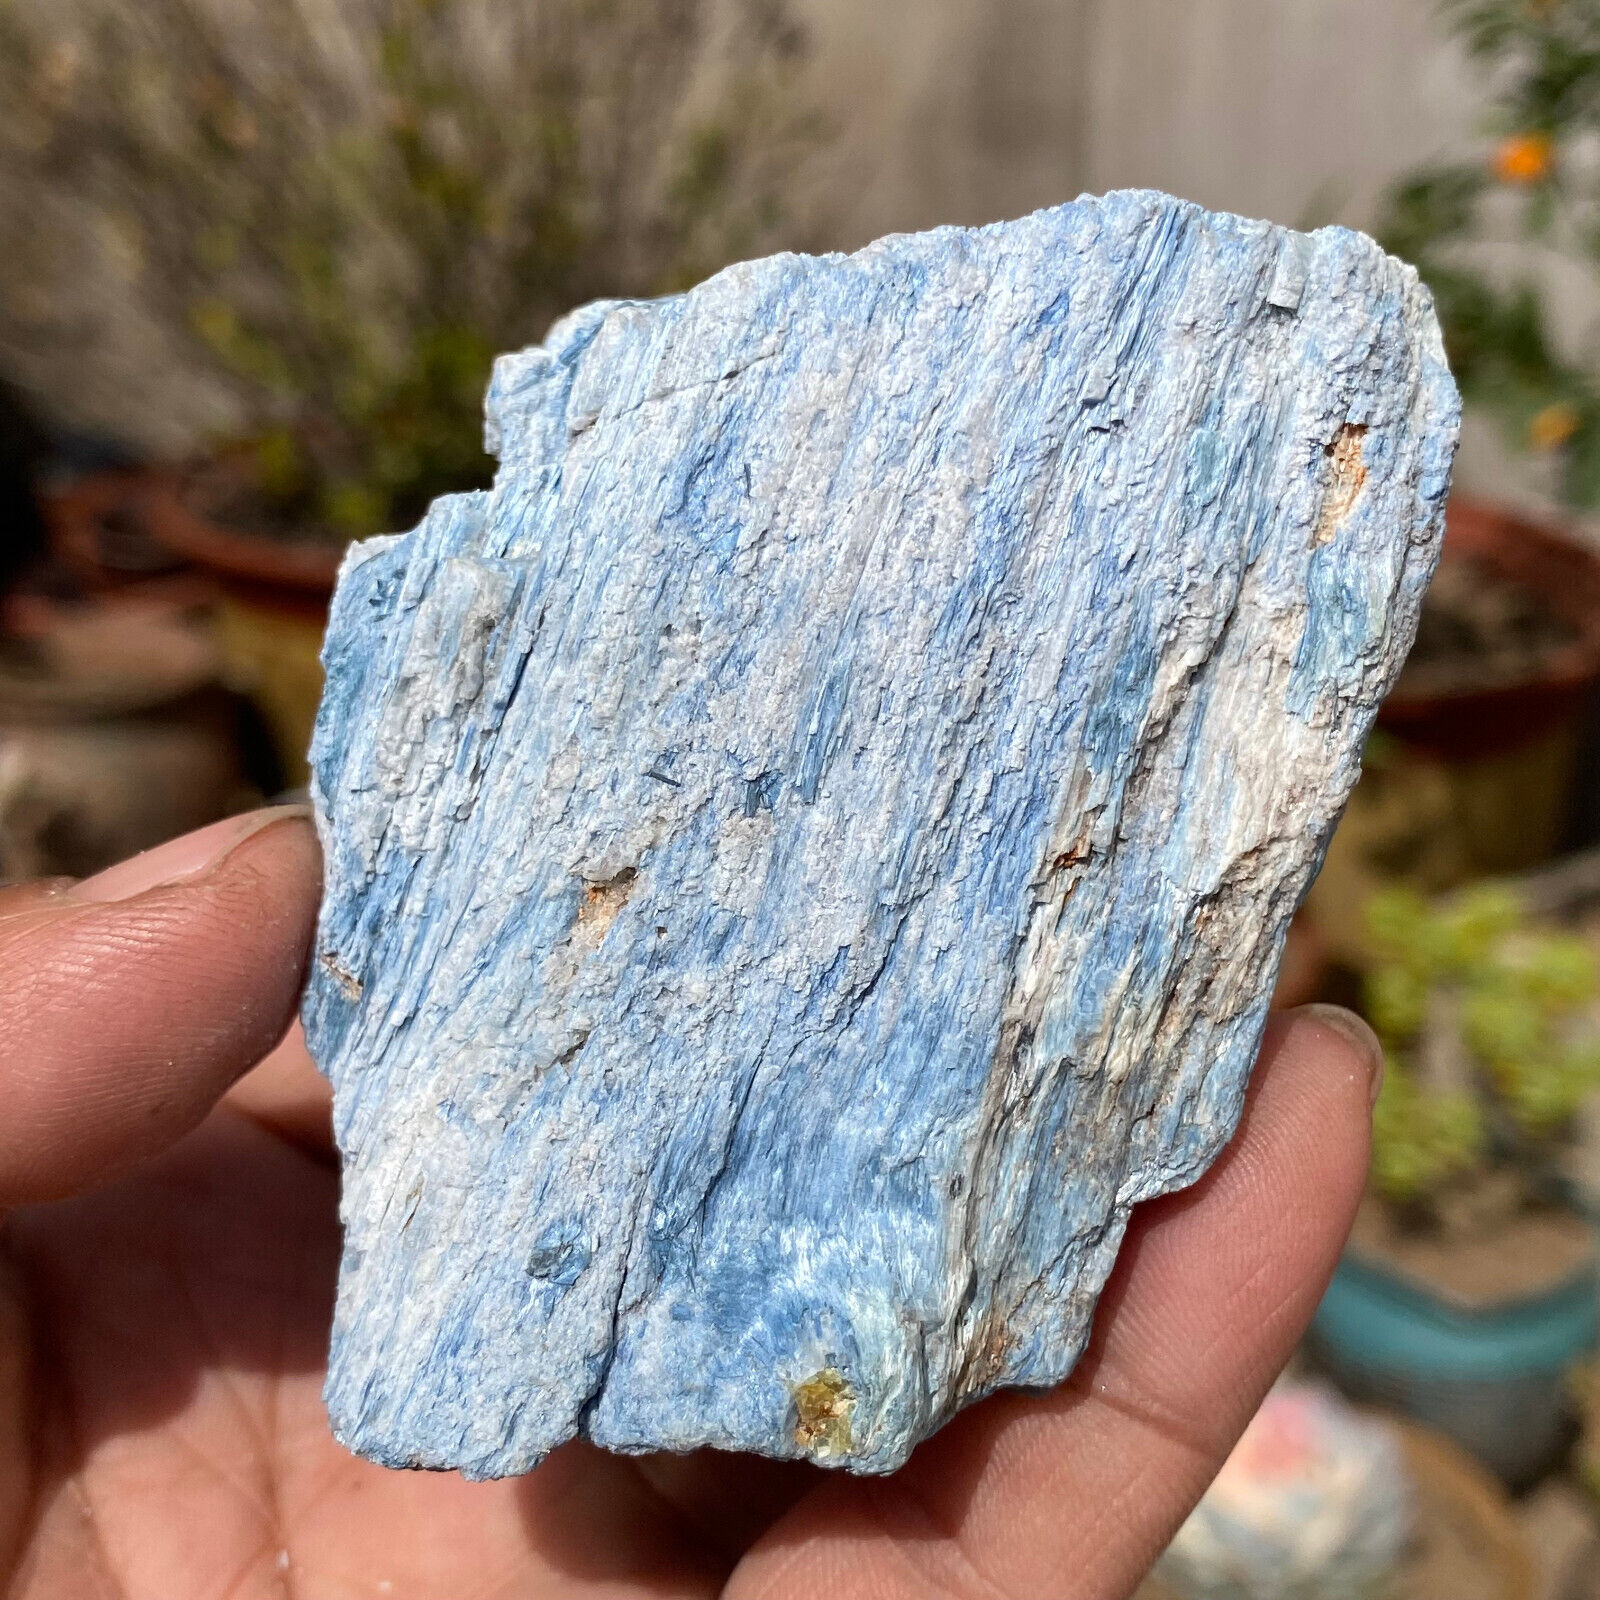 269g Large Rare Dumortierite Blue Gemstone Crystal Rough Specimen Madagascar